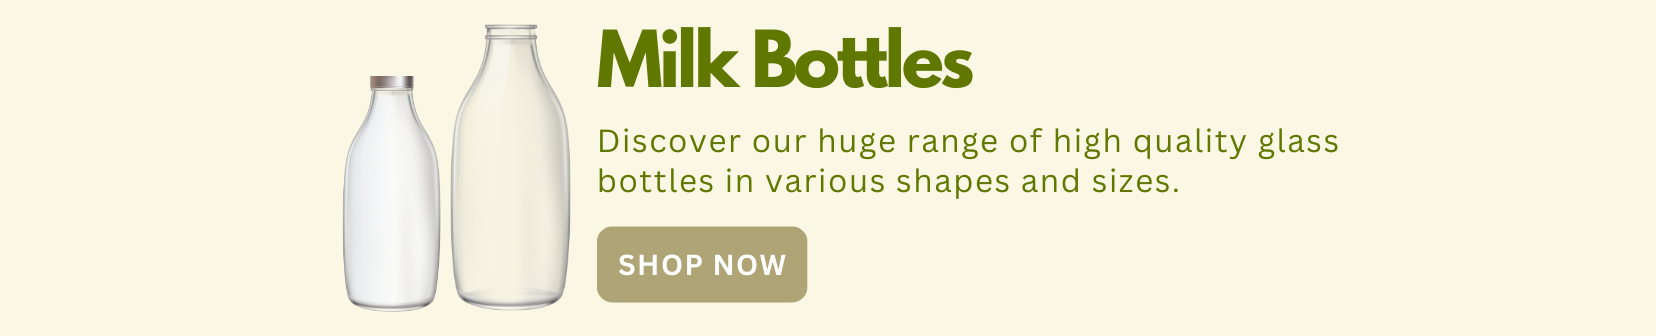 Milk Bottles for Homemade Kefir by Wares of Knutsford